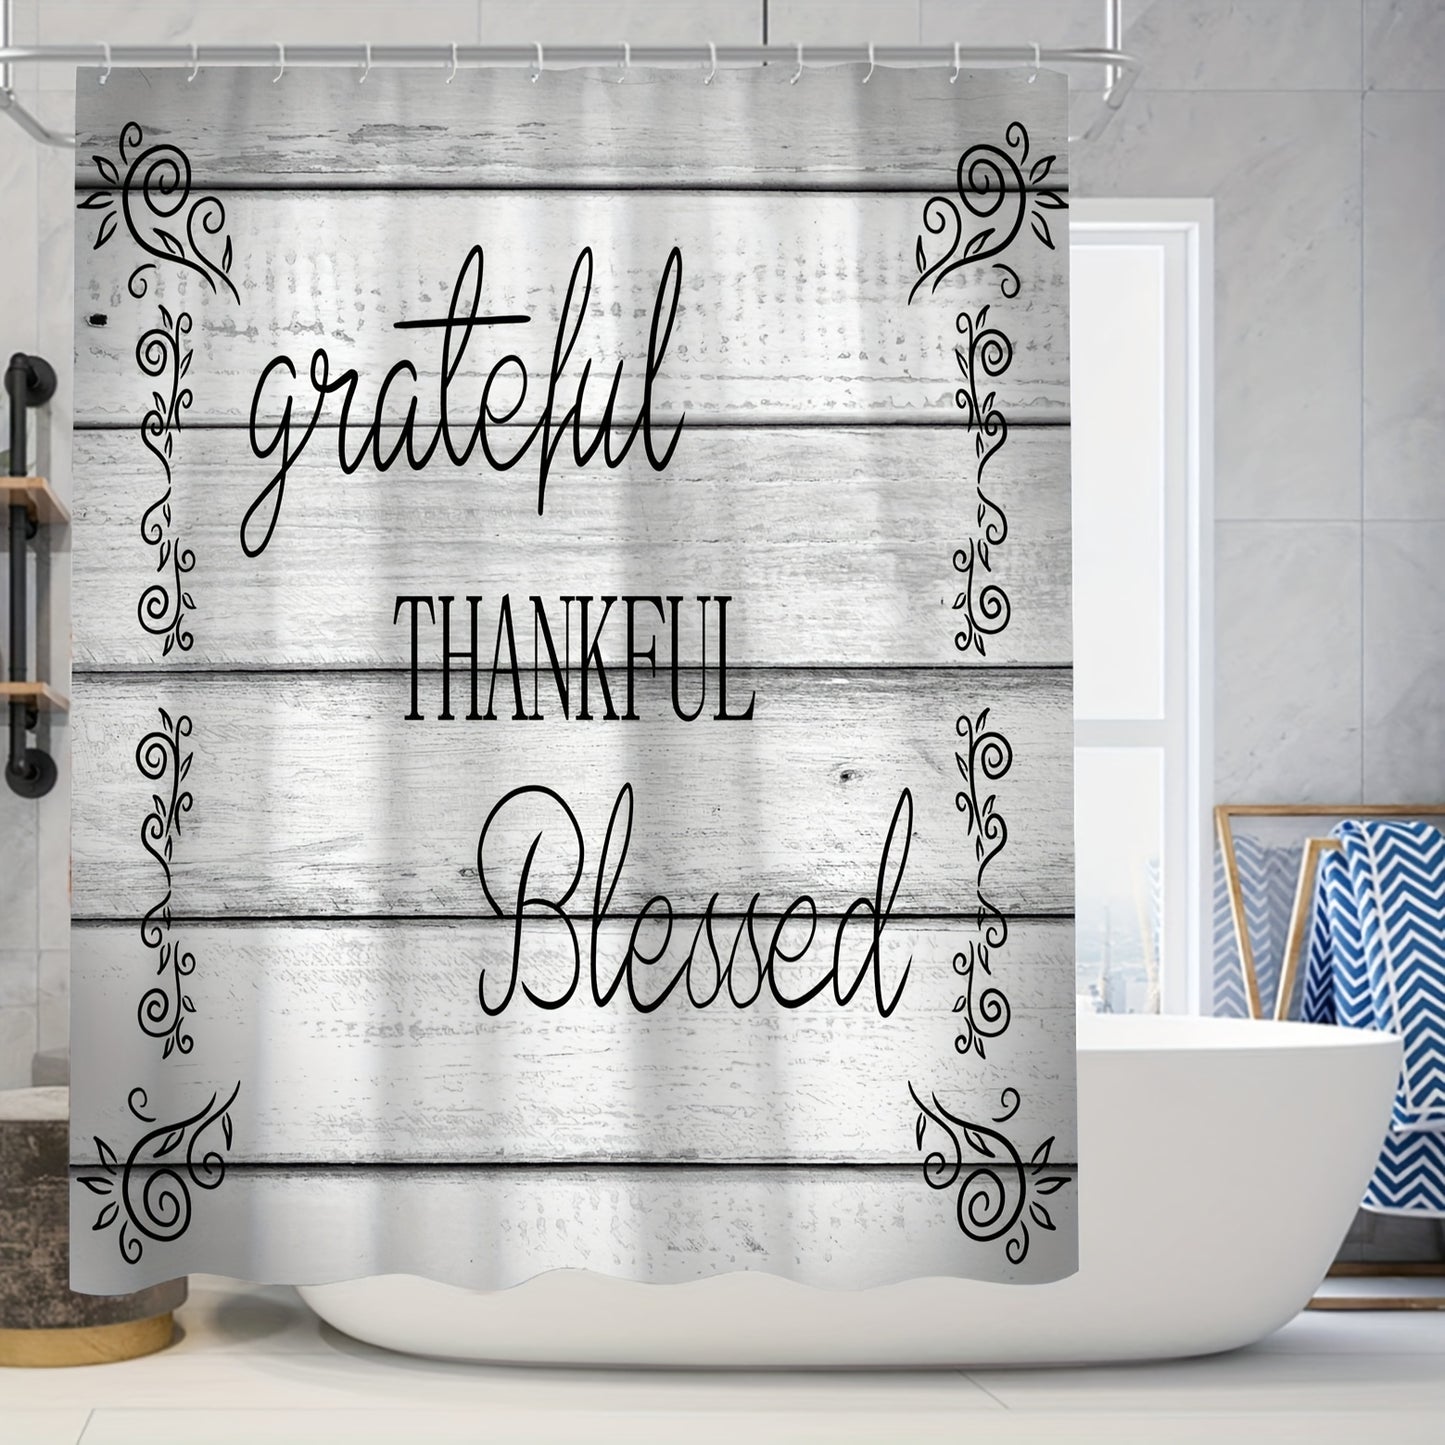 Grateful Thankful Blessed Christian Shower Curtain Set With 12 Hooks, Shower Mat, & Toilet Carpet claimedbygoddesigns